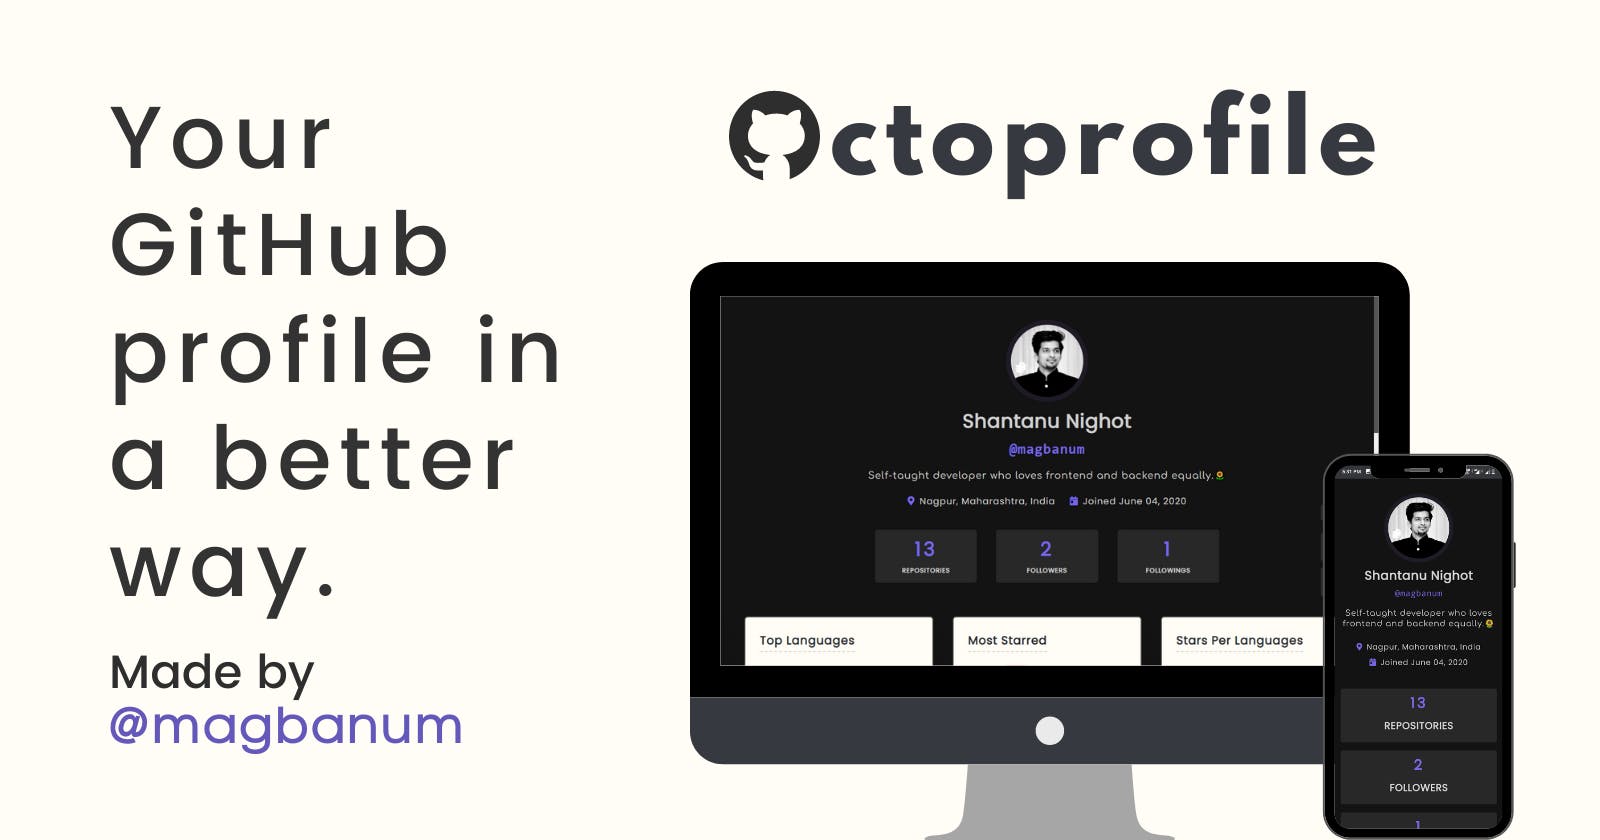 Octoprofile - the Django project